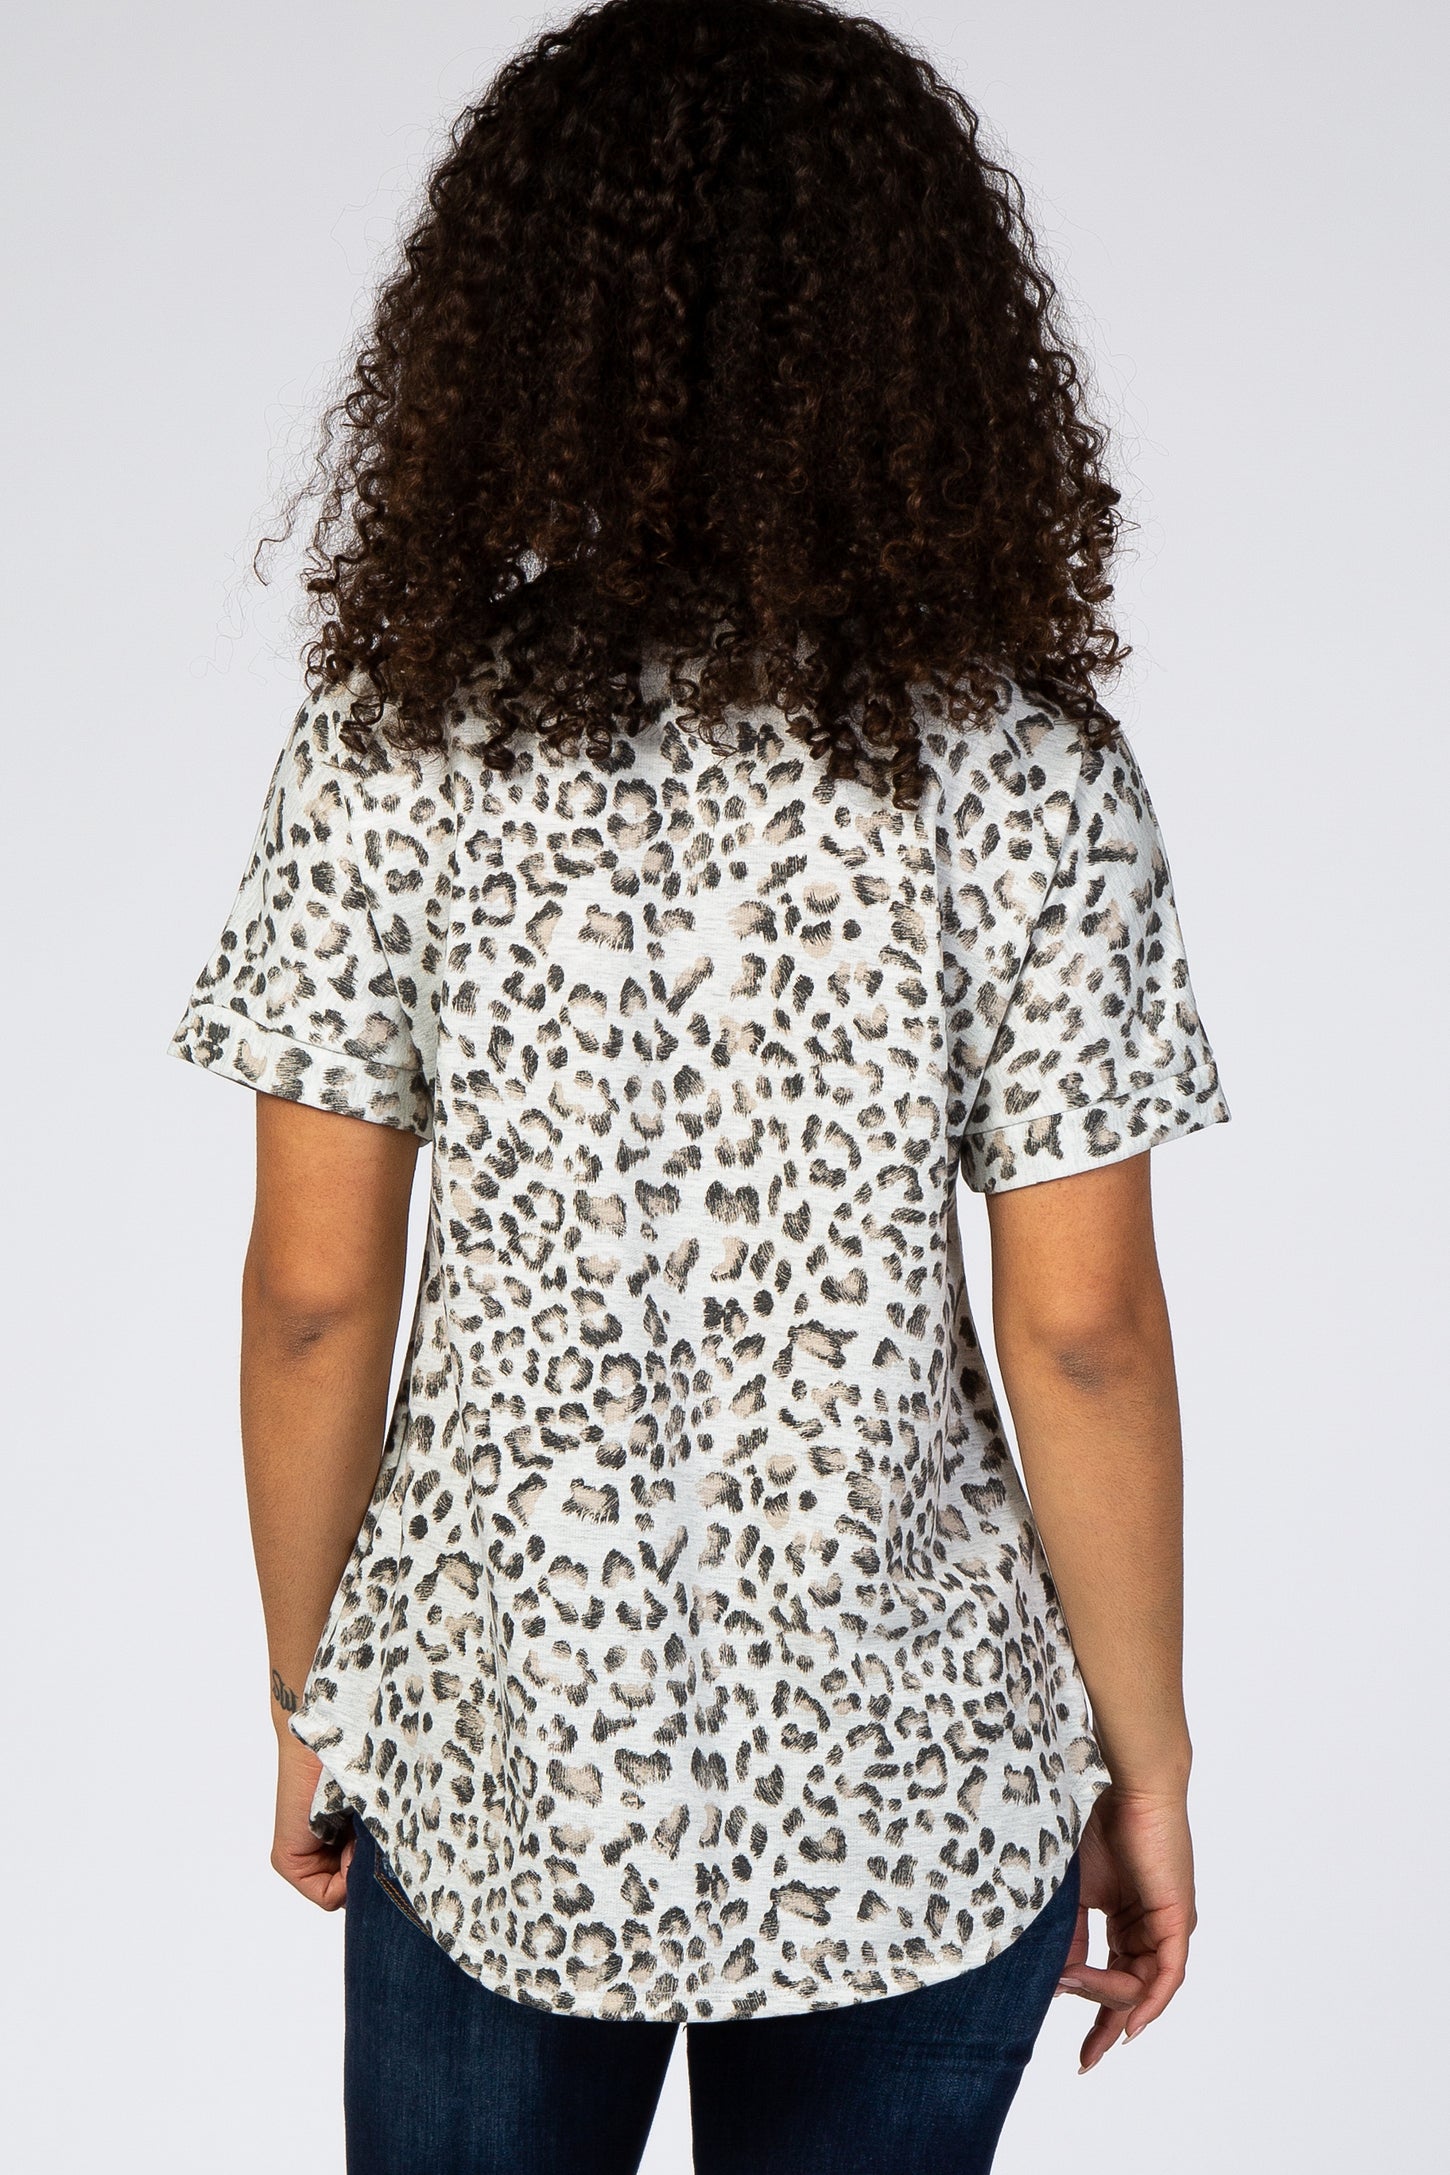 Grey Leopard Print Short Sleeve Top